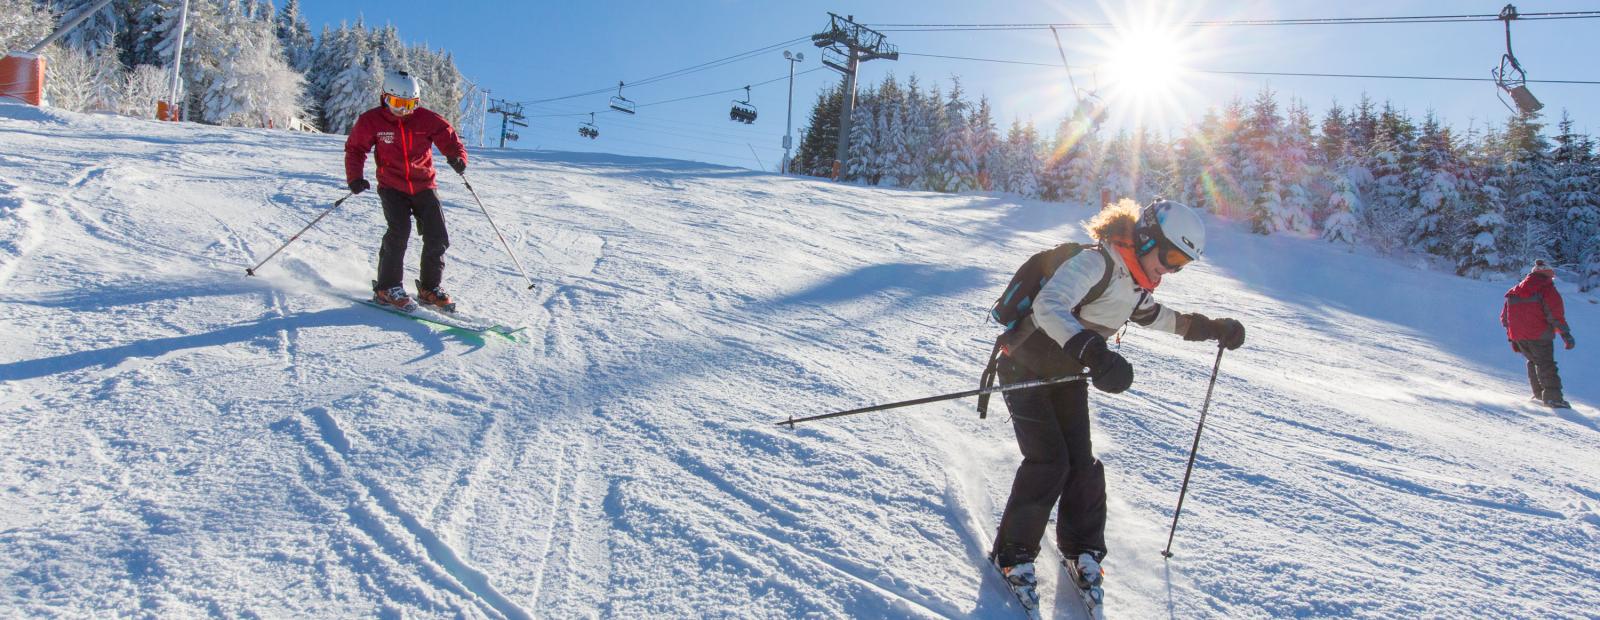 ski-alpin-station-lac-blanc-vosges-télésiège-piste